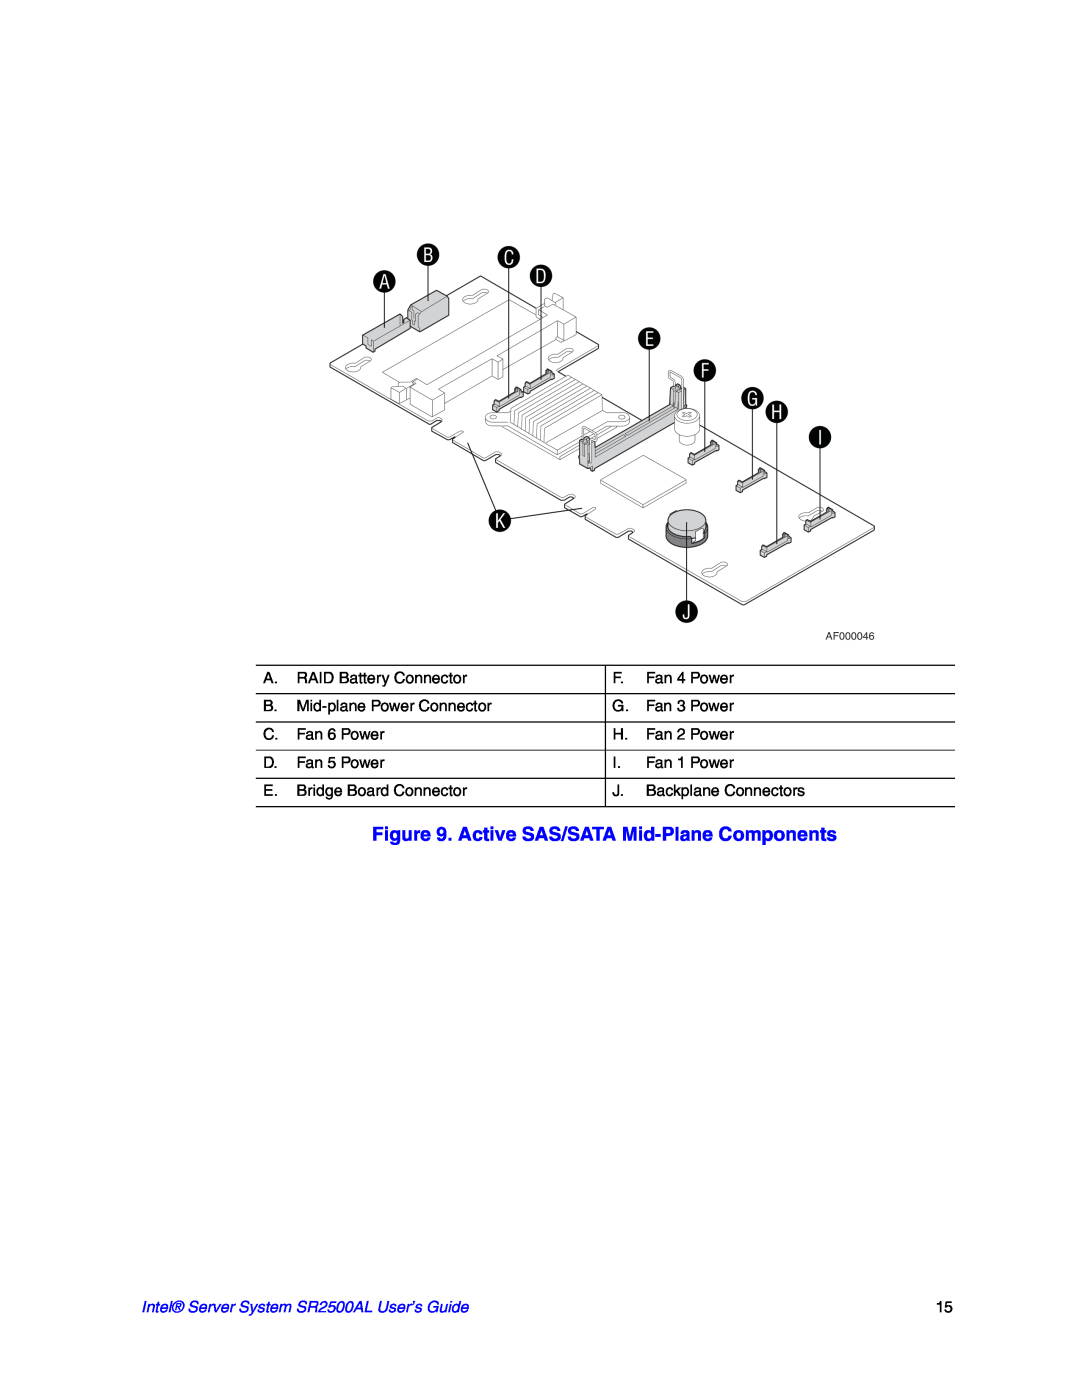 Intel manual E F G, Active SAS/SATA Mid-Plane Components, Intel Server System SR2500AL User’s Guide, AF000046 